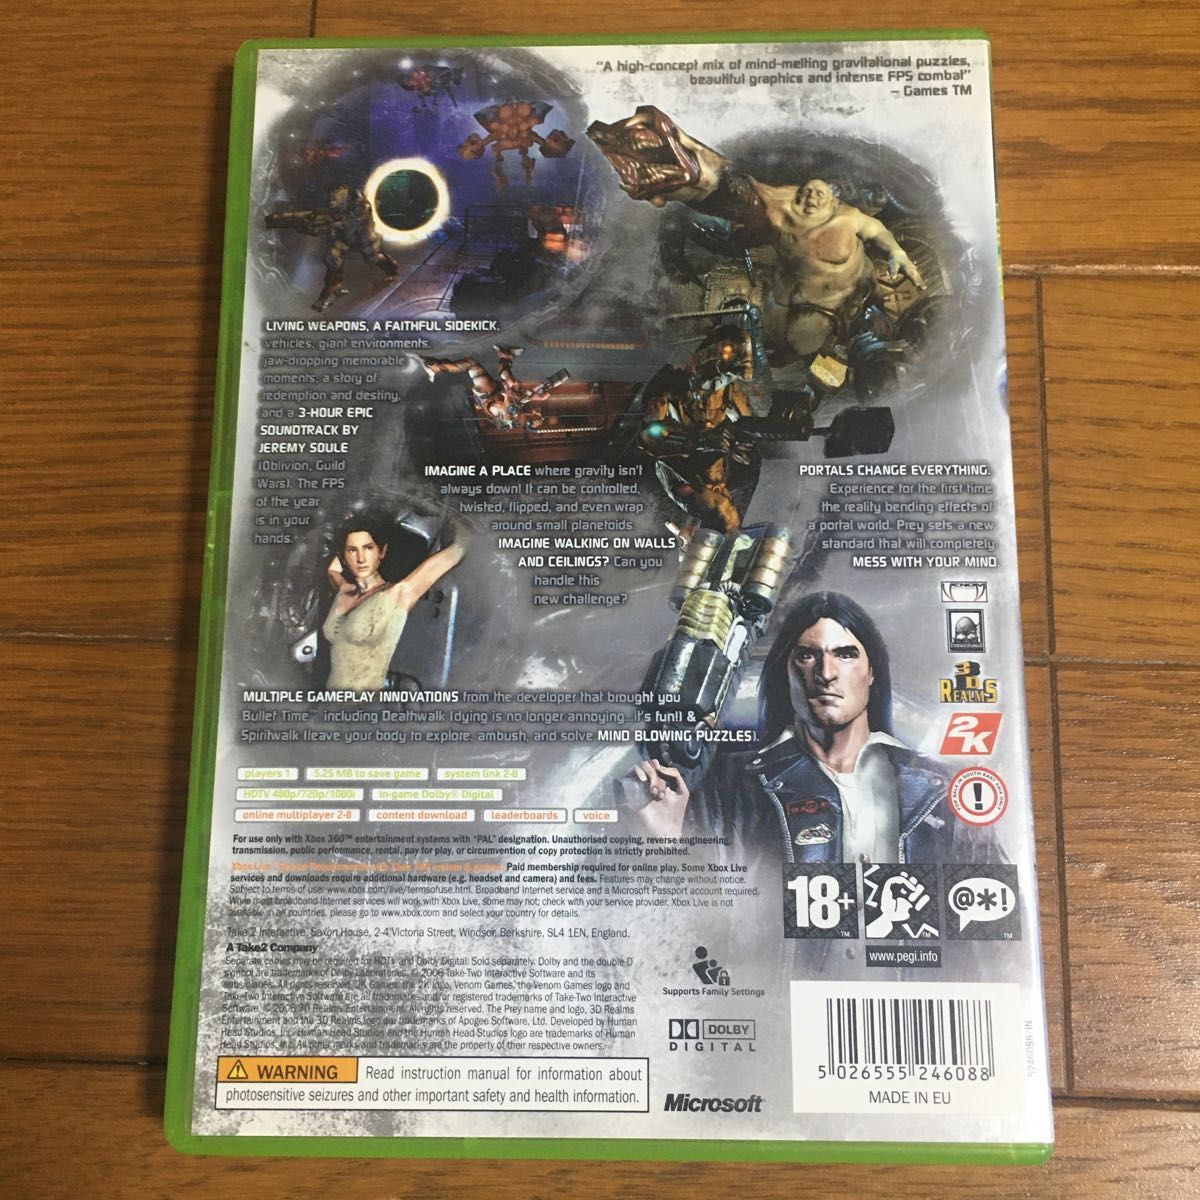 Xbox360 / PREY プレイ 海外版　【Xbox One 互換対応】